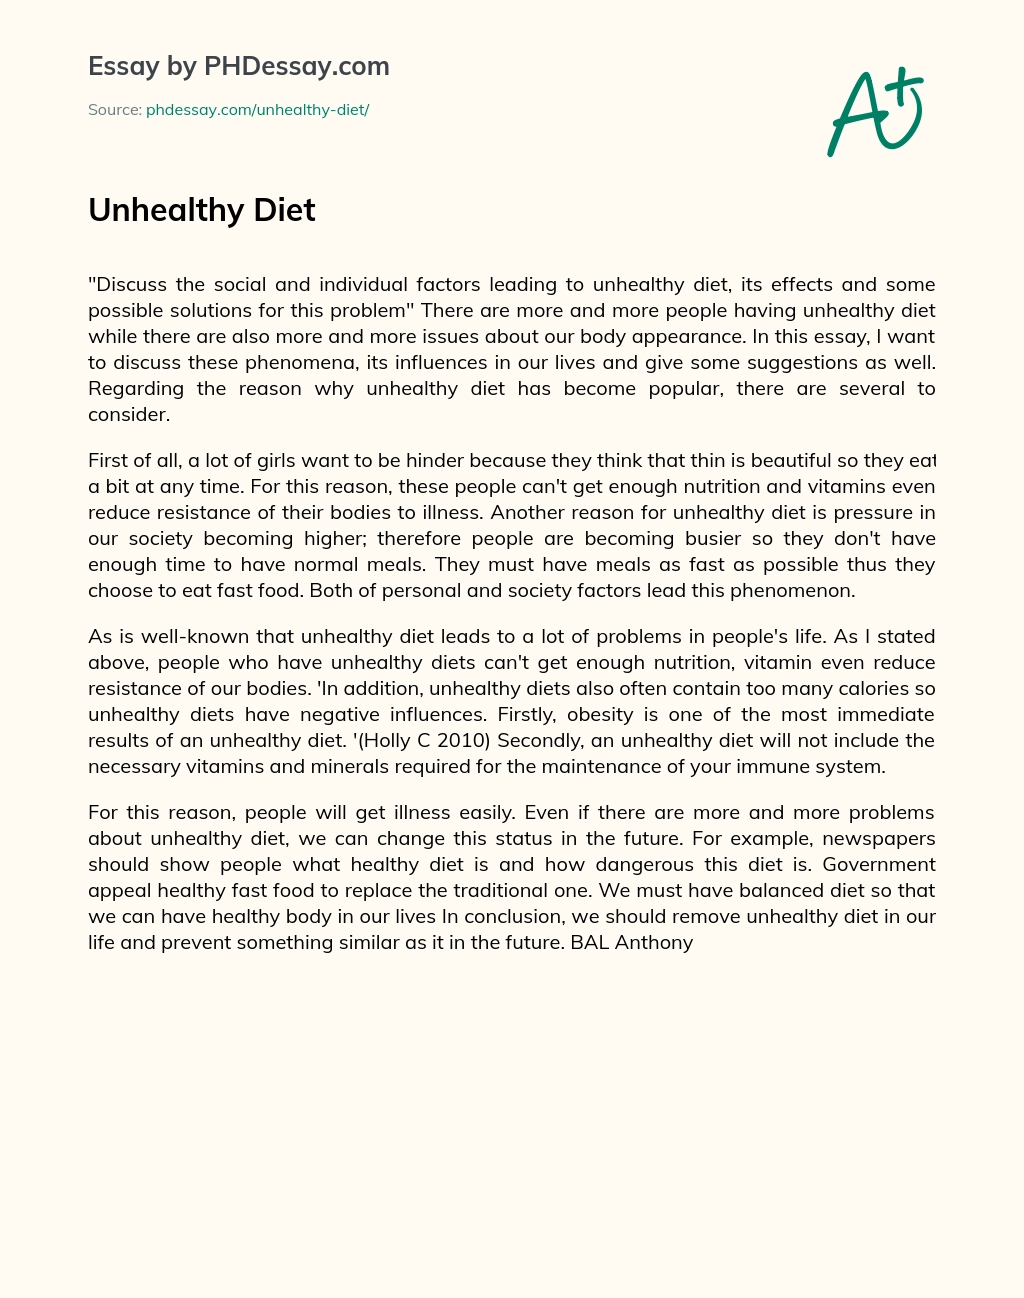 Unhealthy Diet essay